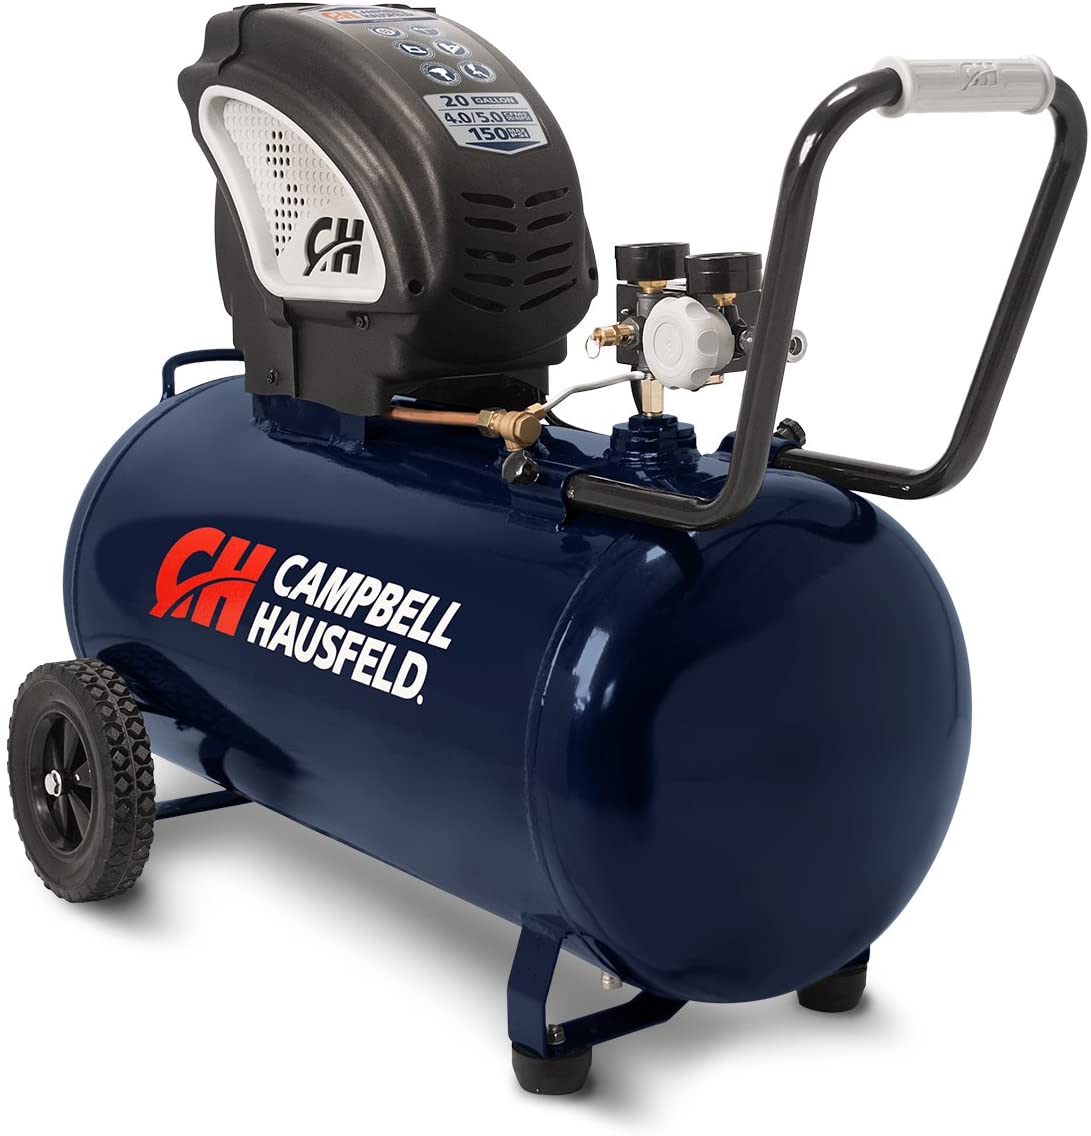 Campbell Hausfeld Horizontal Air Compressor For Garage Review